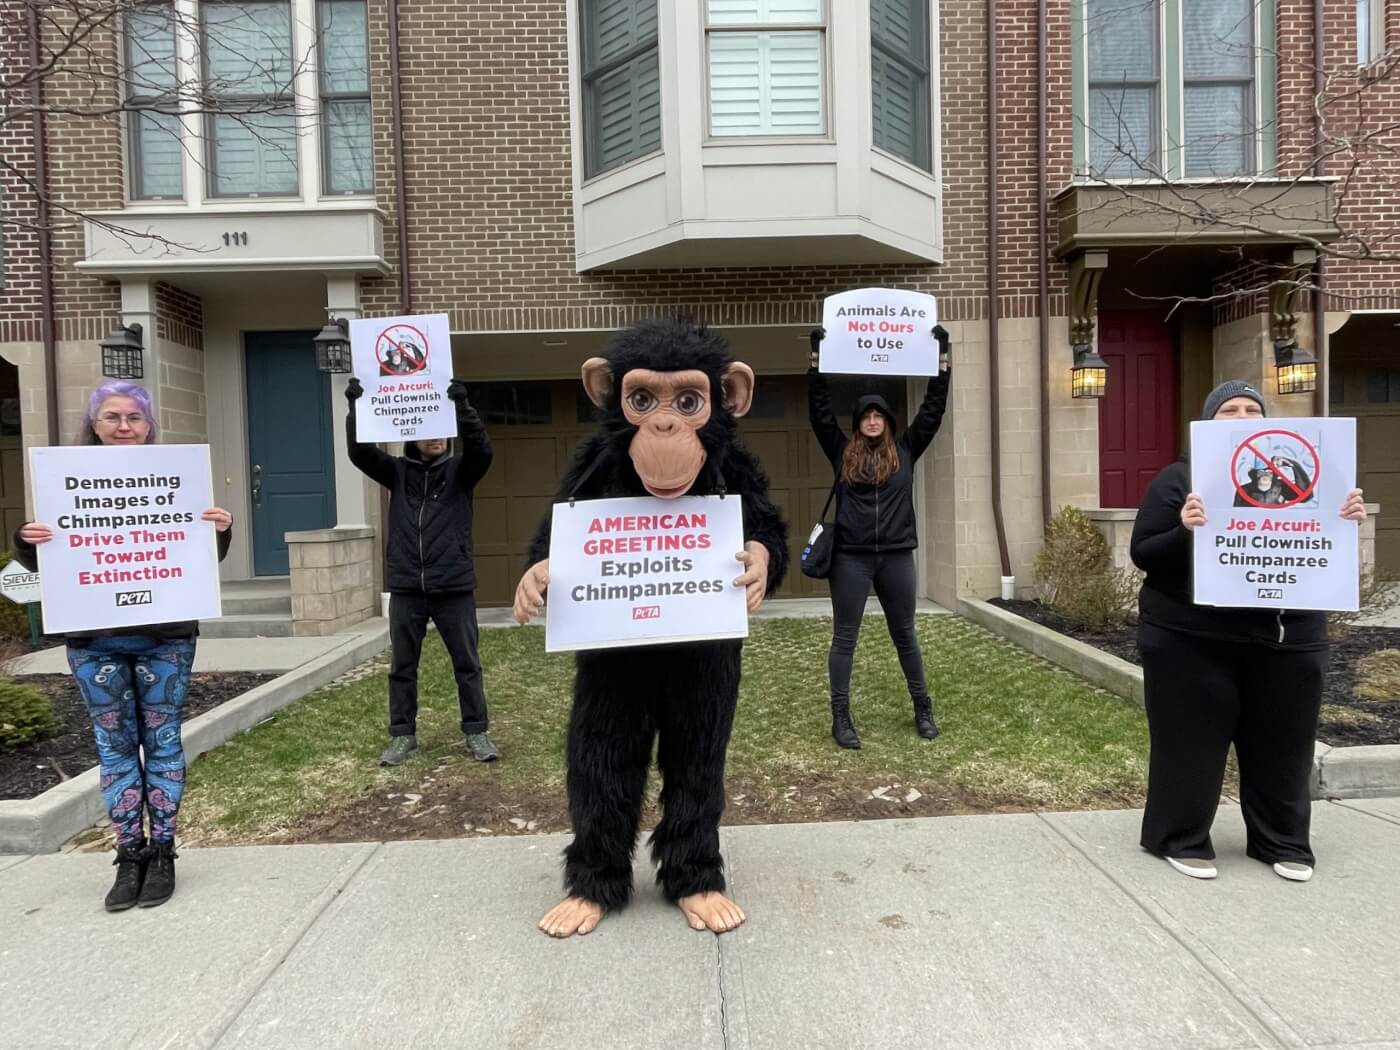 American Greetings Bans Chimpanzee Cards